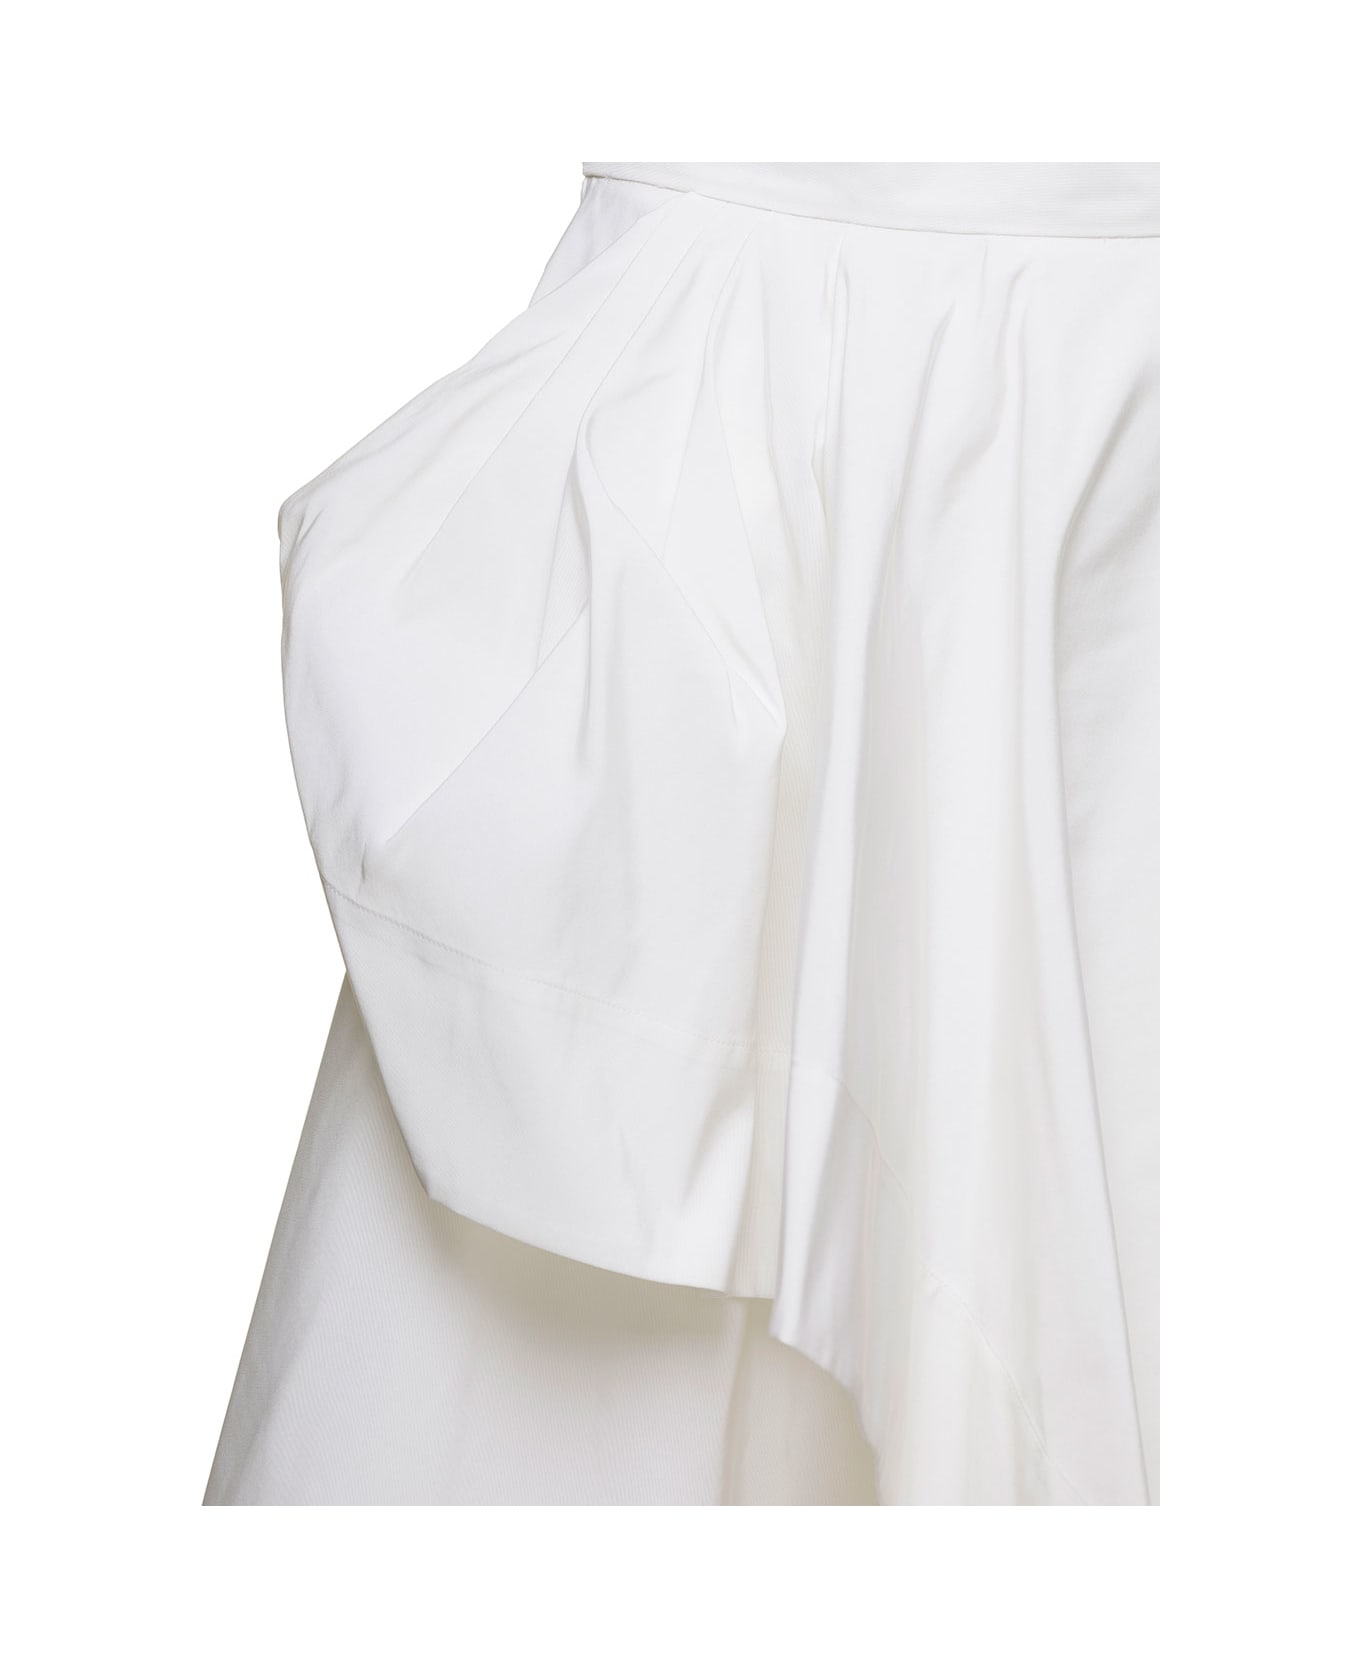 Alexander McQueen White Draped Round Asymmetric Skirt In Polyfaille Woman - White